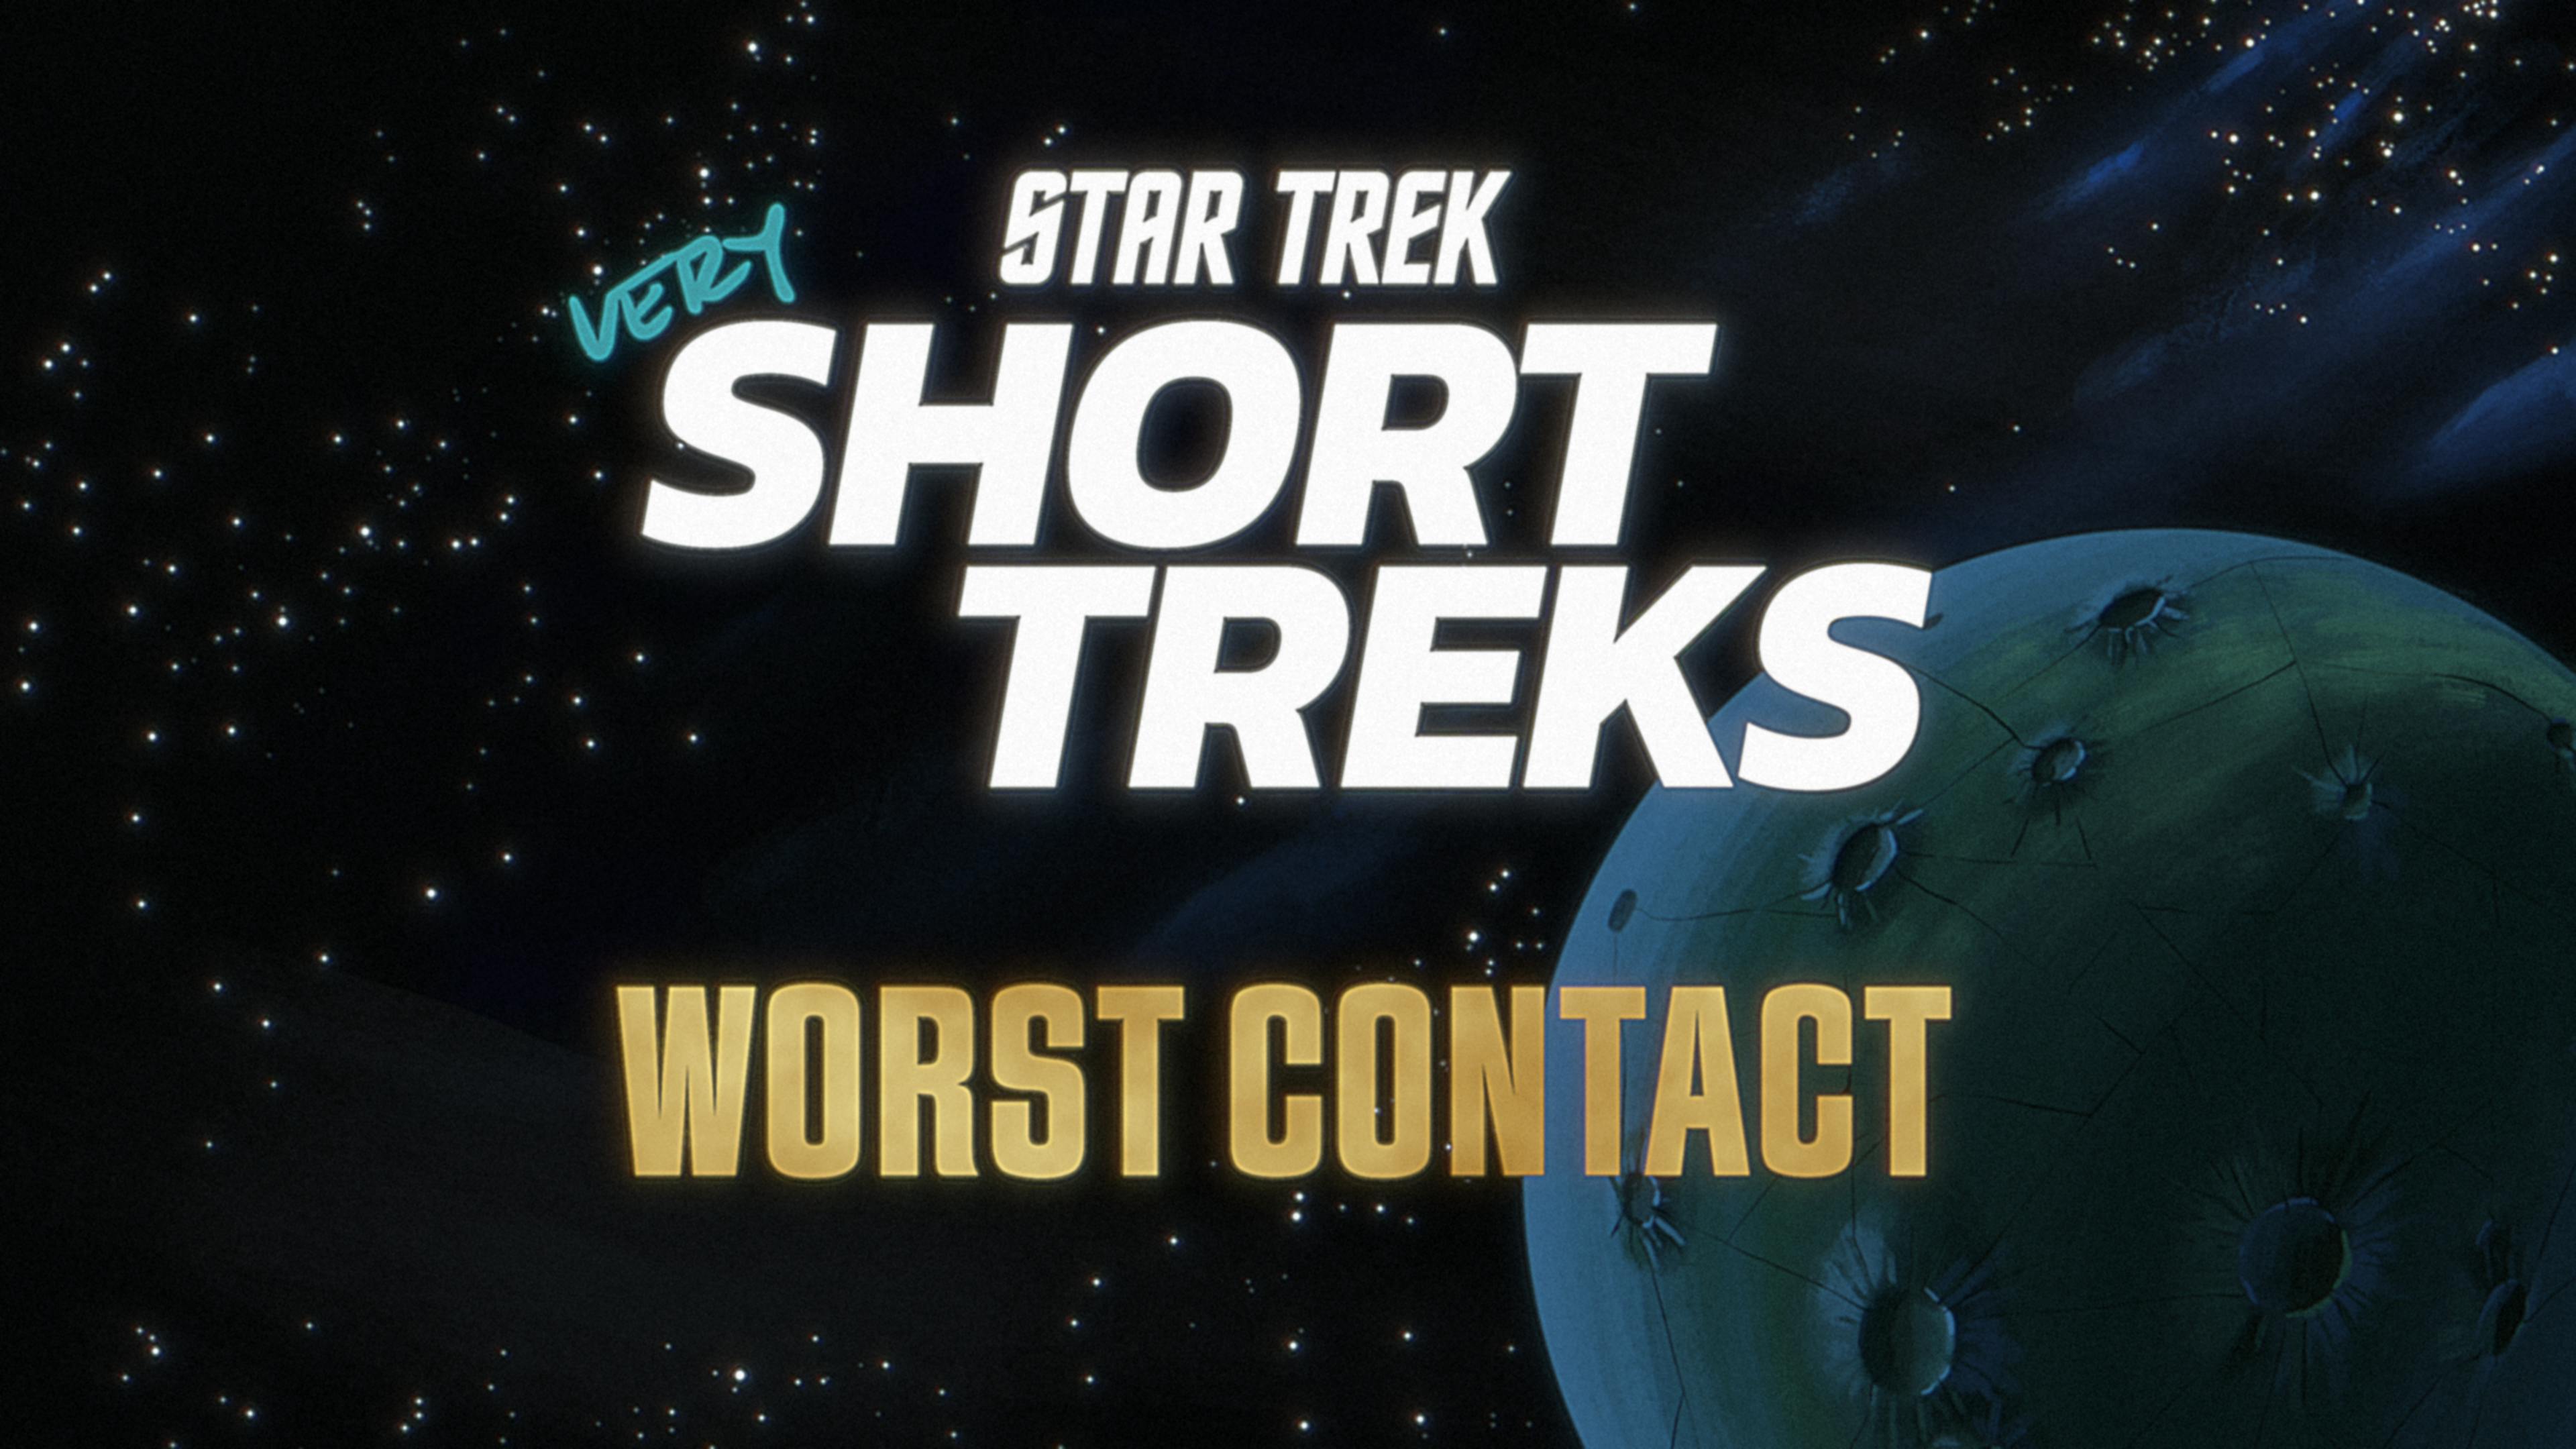 Star Trek: very Short Treks title treatment with 'Worst Contact' text